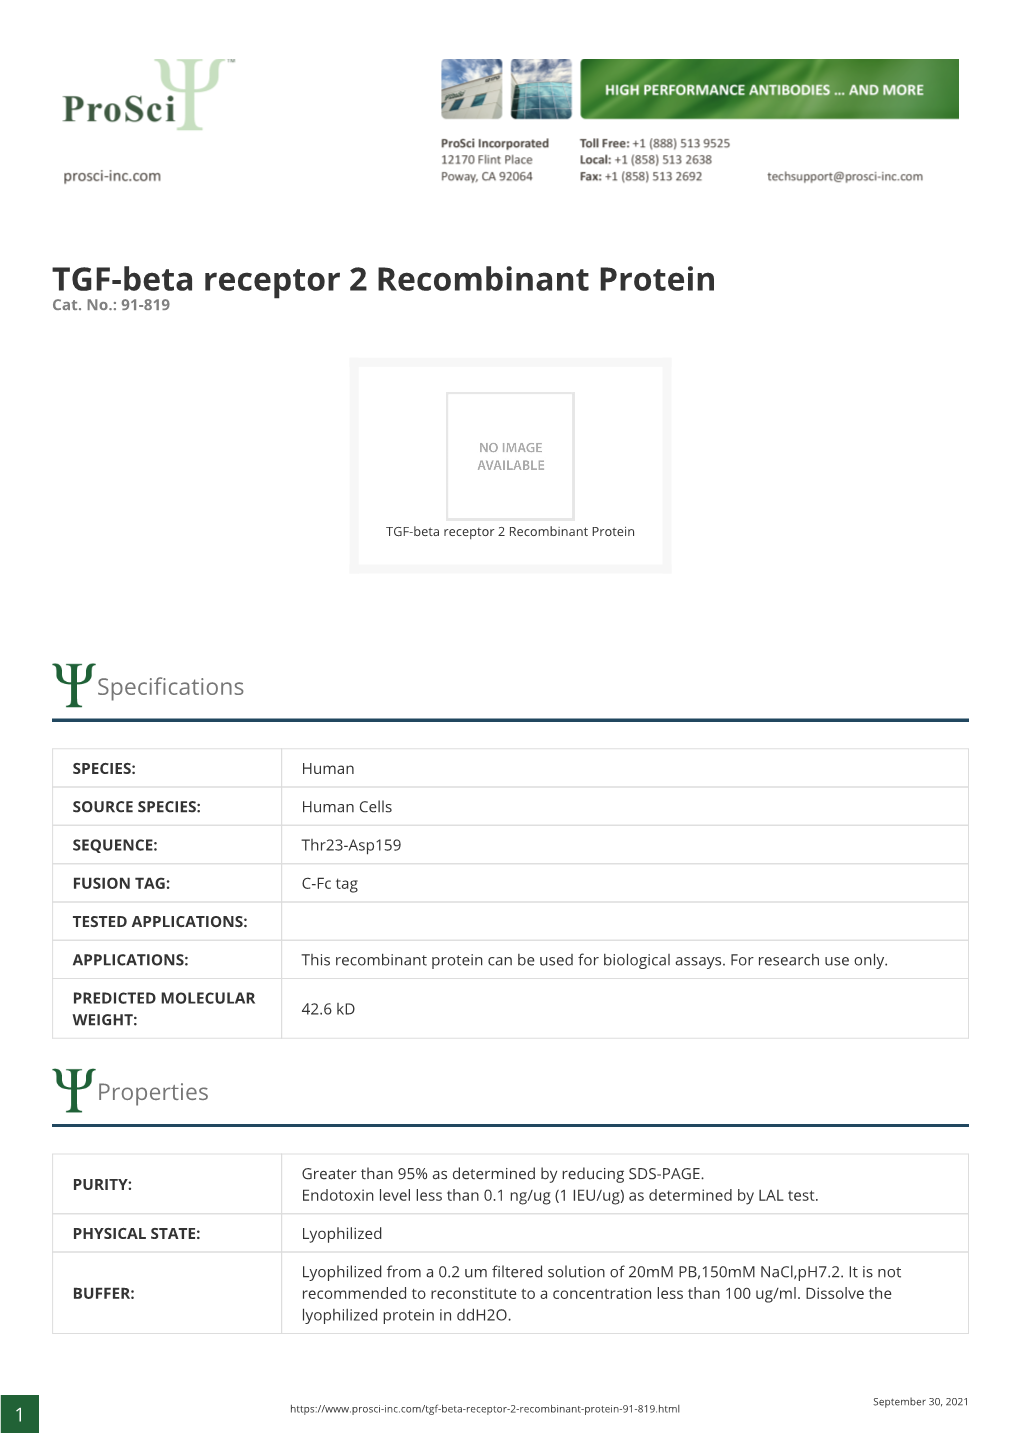 TGF-Beta Receptor 2 Recombinant Protein Cat